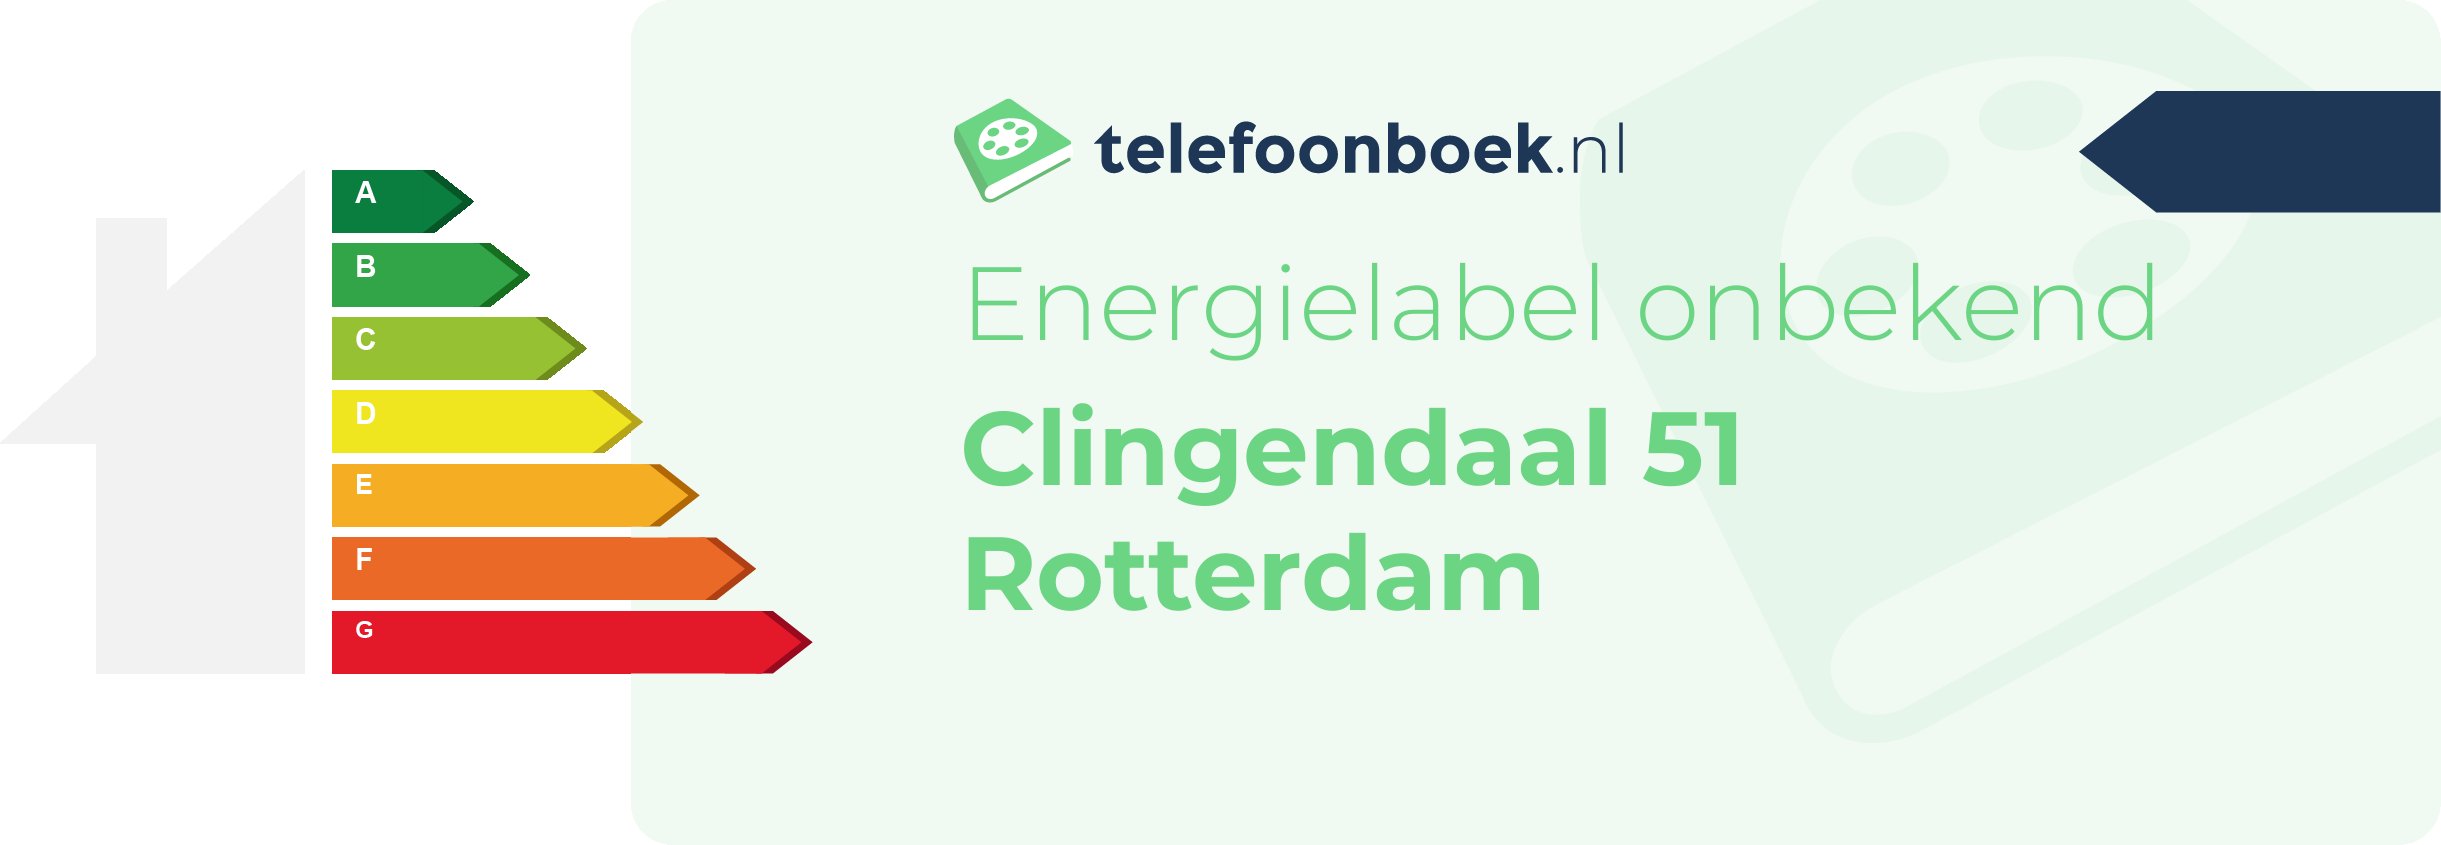 Energielabel Clingendaal 51 Rotterdam